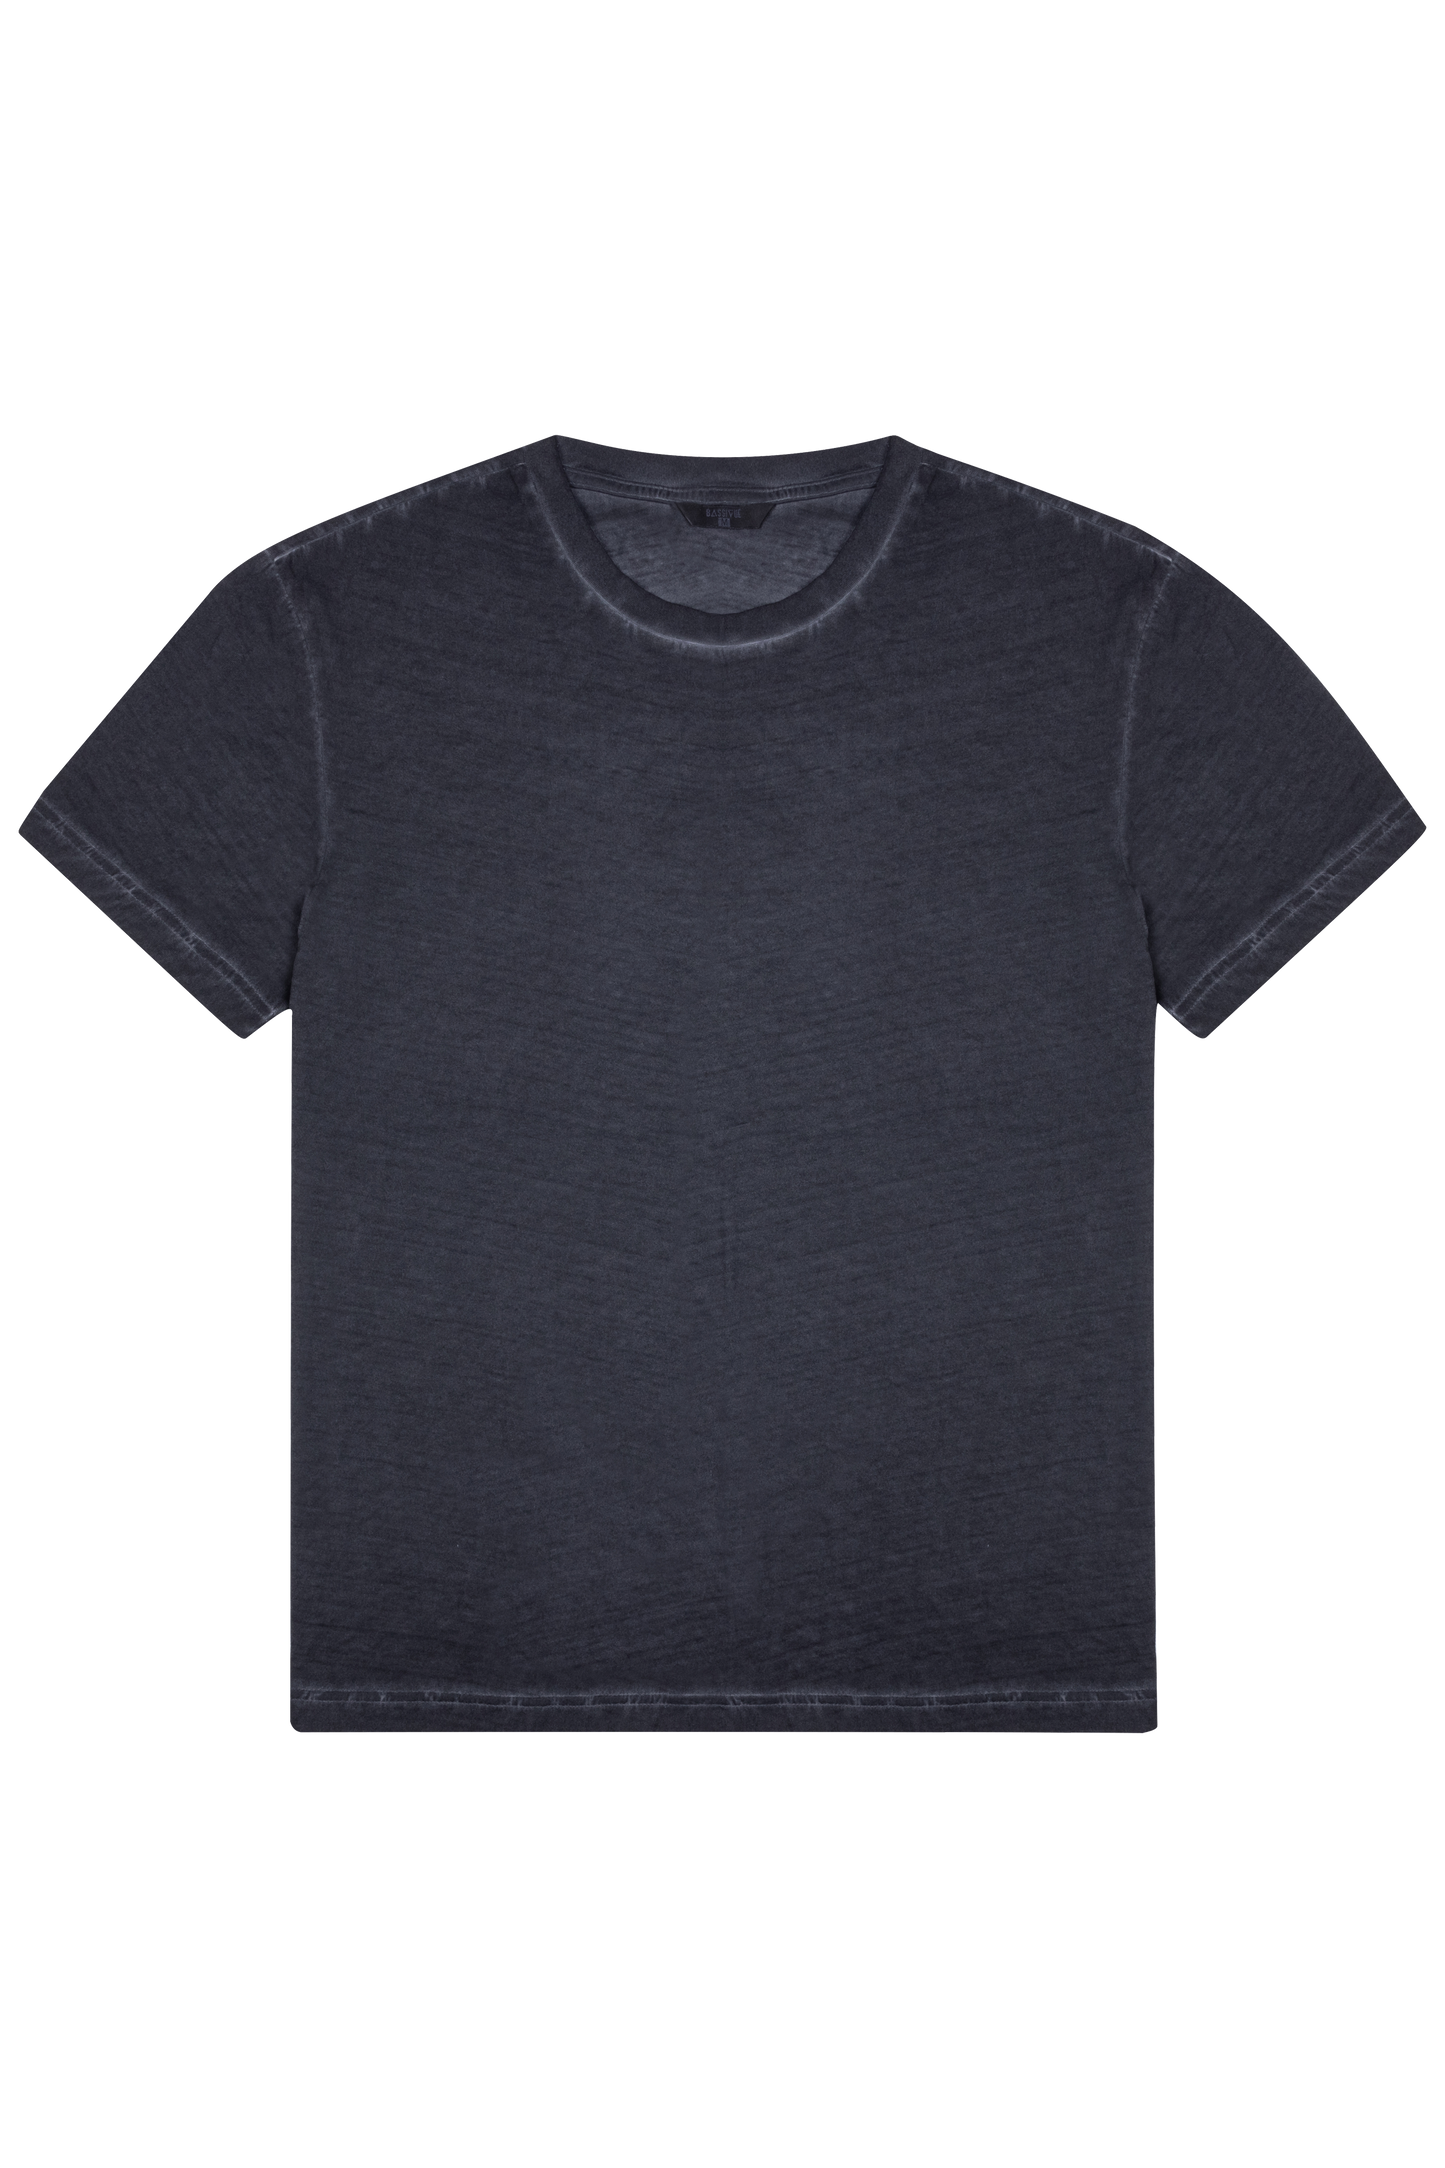 Black Washed T-Shirt